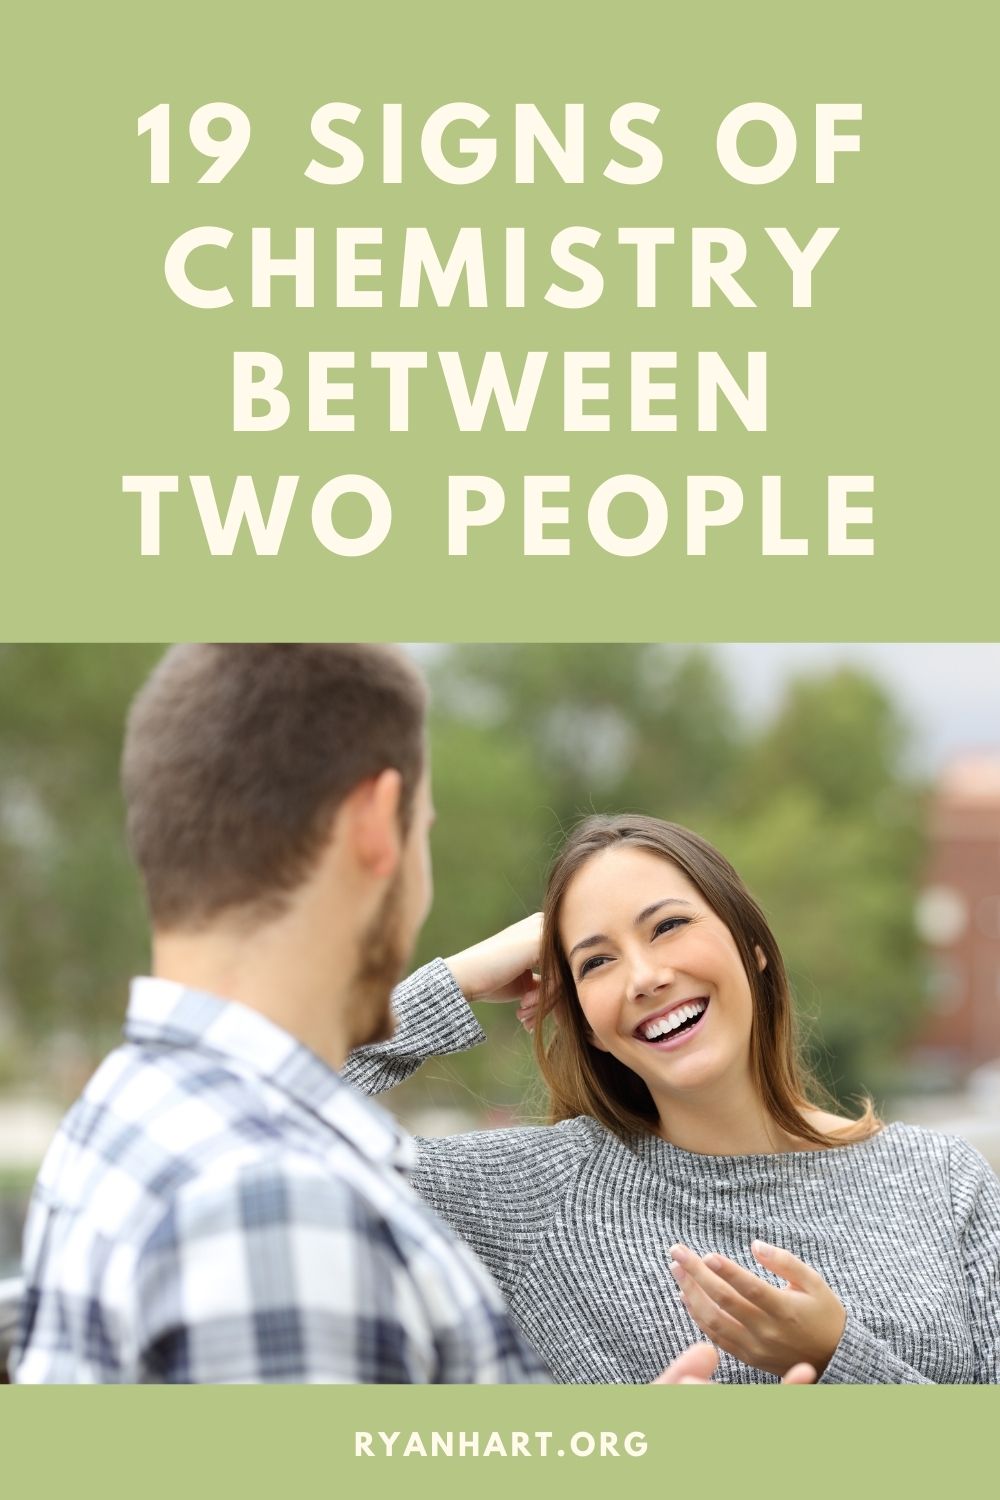  19 segni di chimica tra due persone